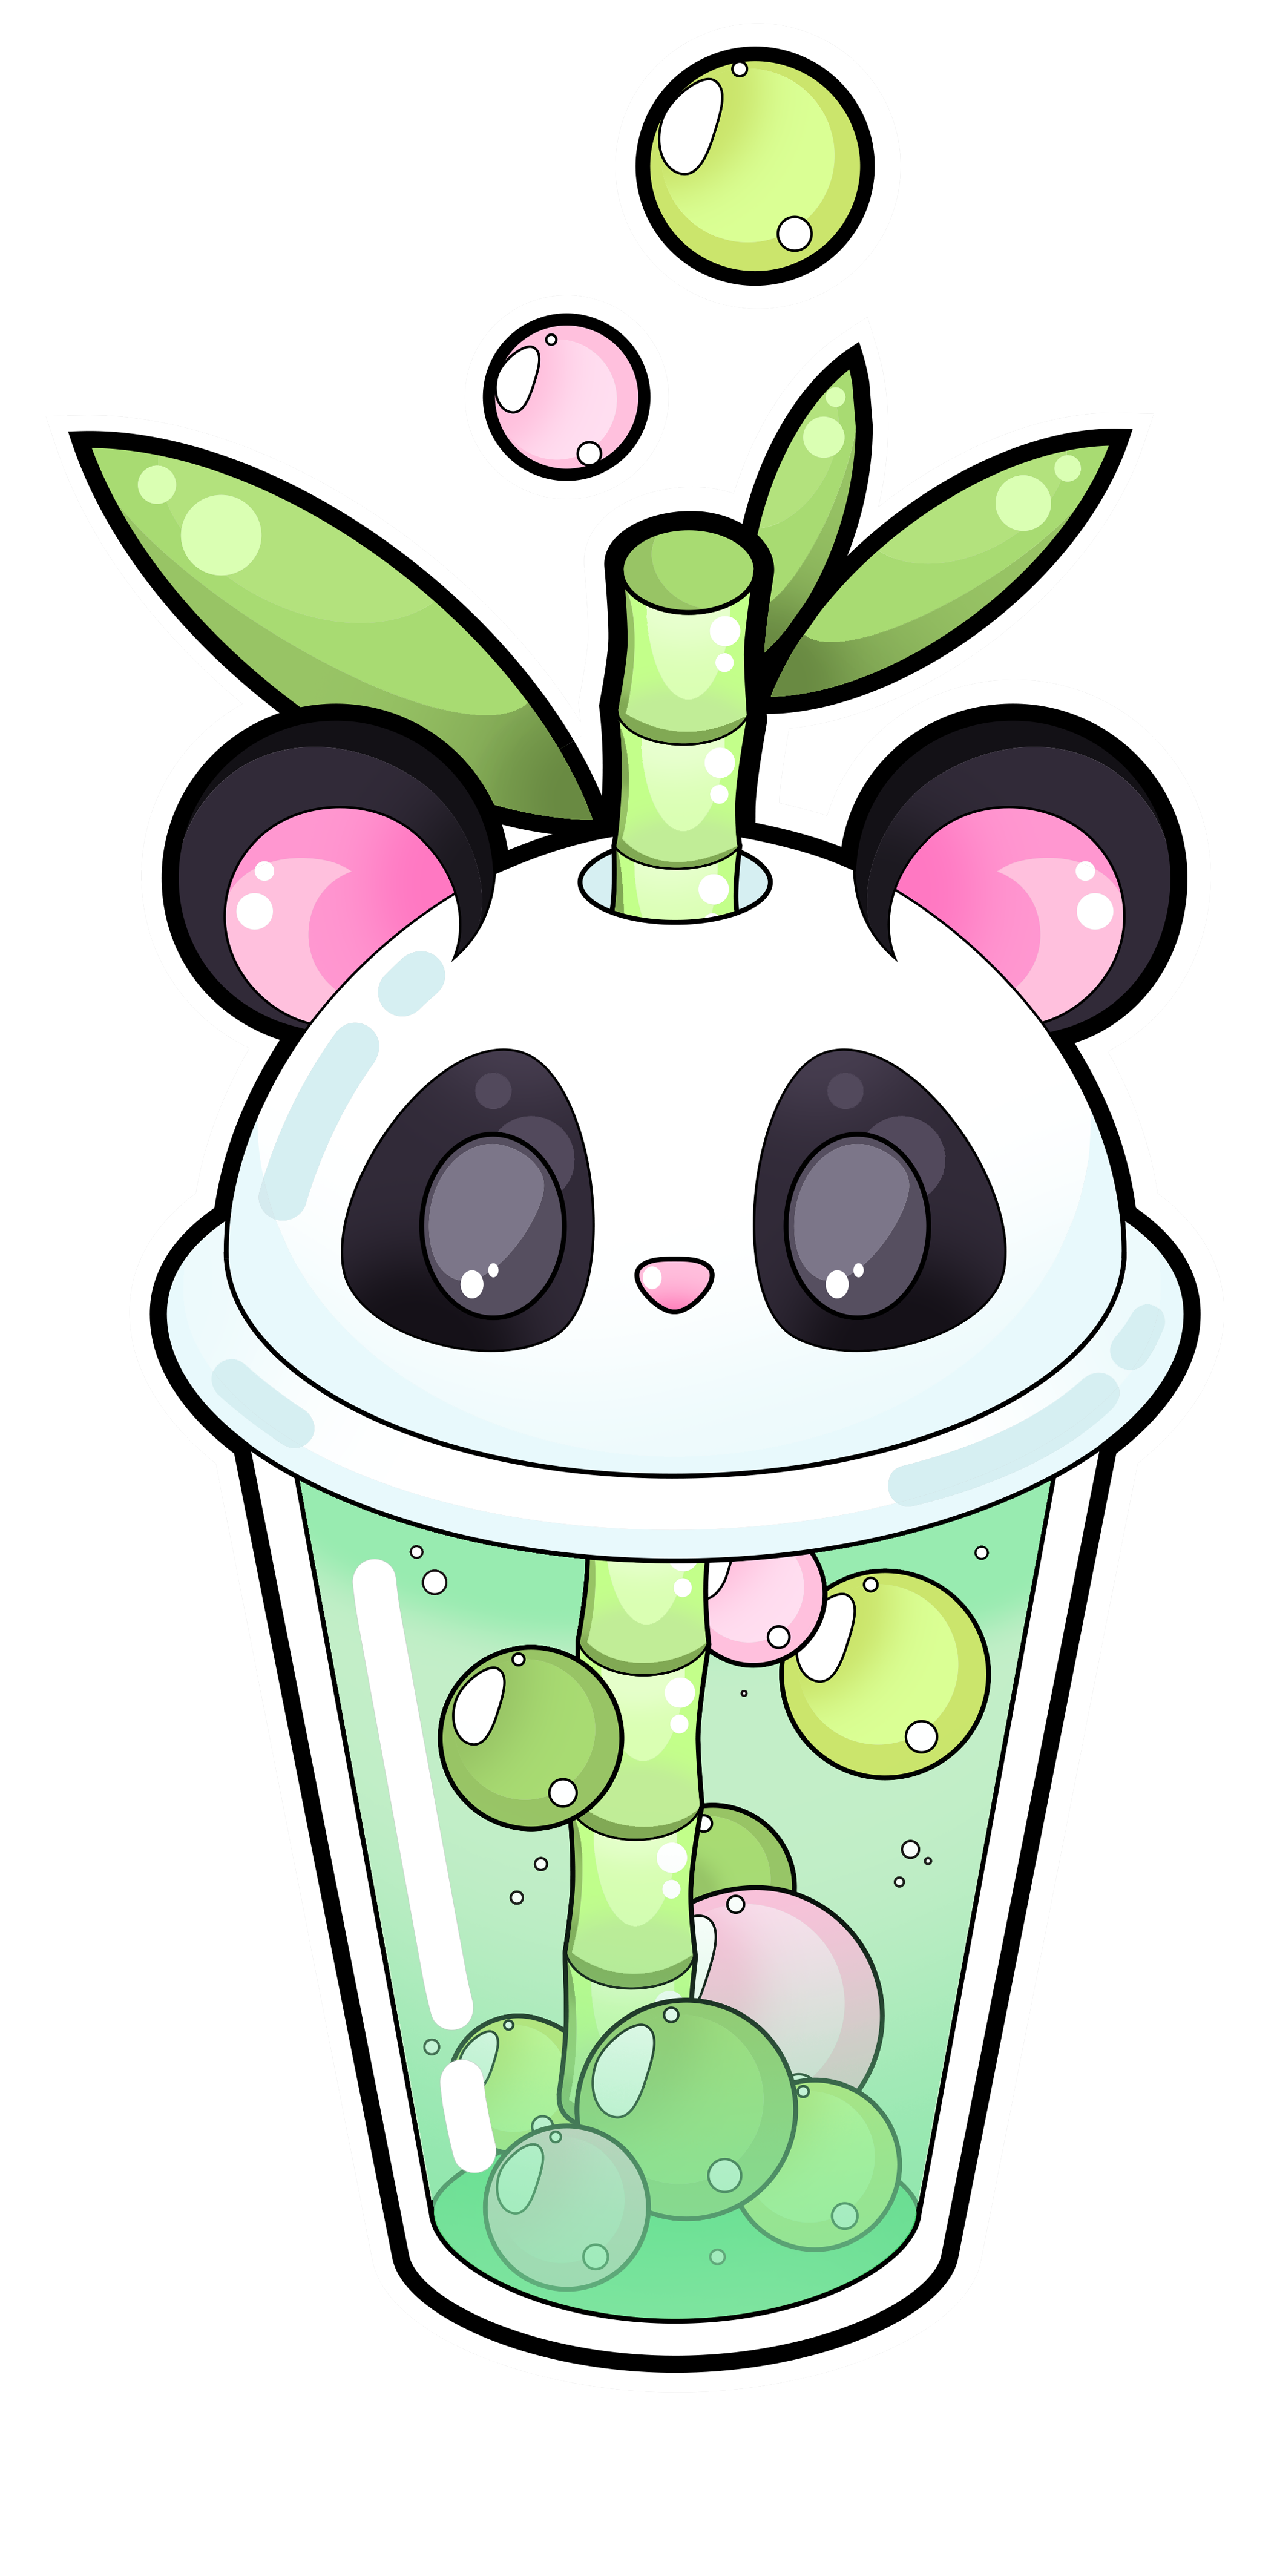 Panda bubble by meloxi. Starbucks clipart frappuccino green tea tumblr